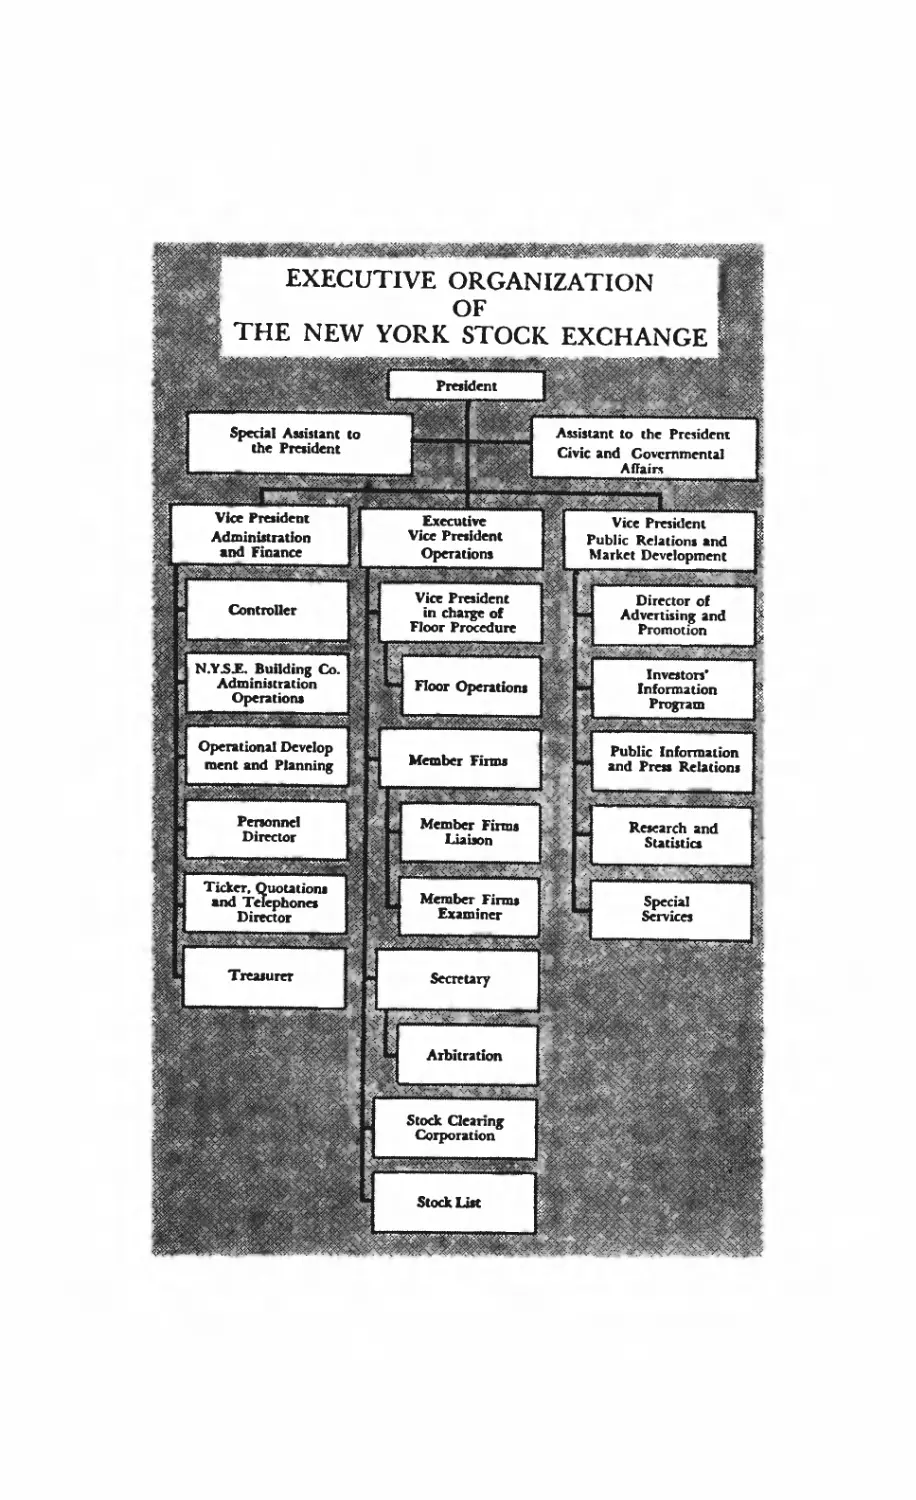 Executive organization of the NYSE